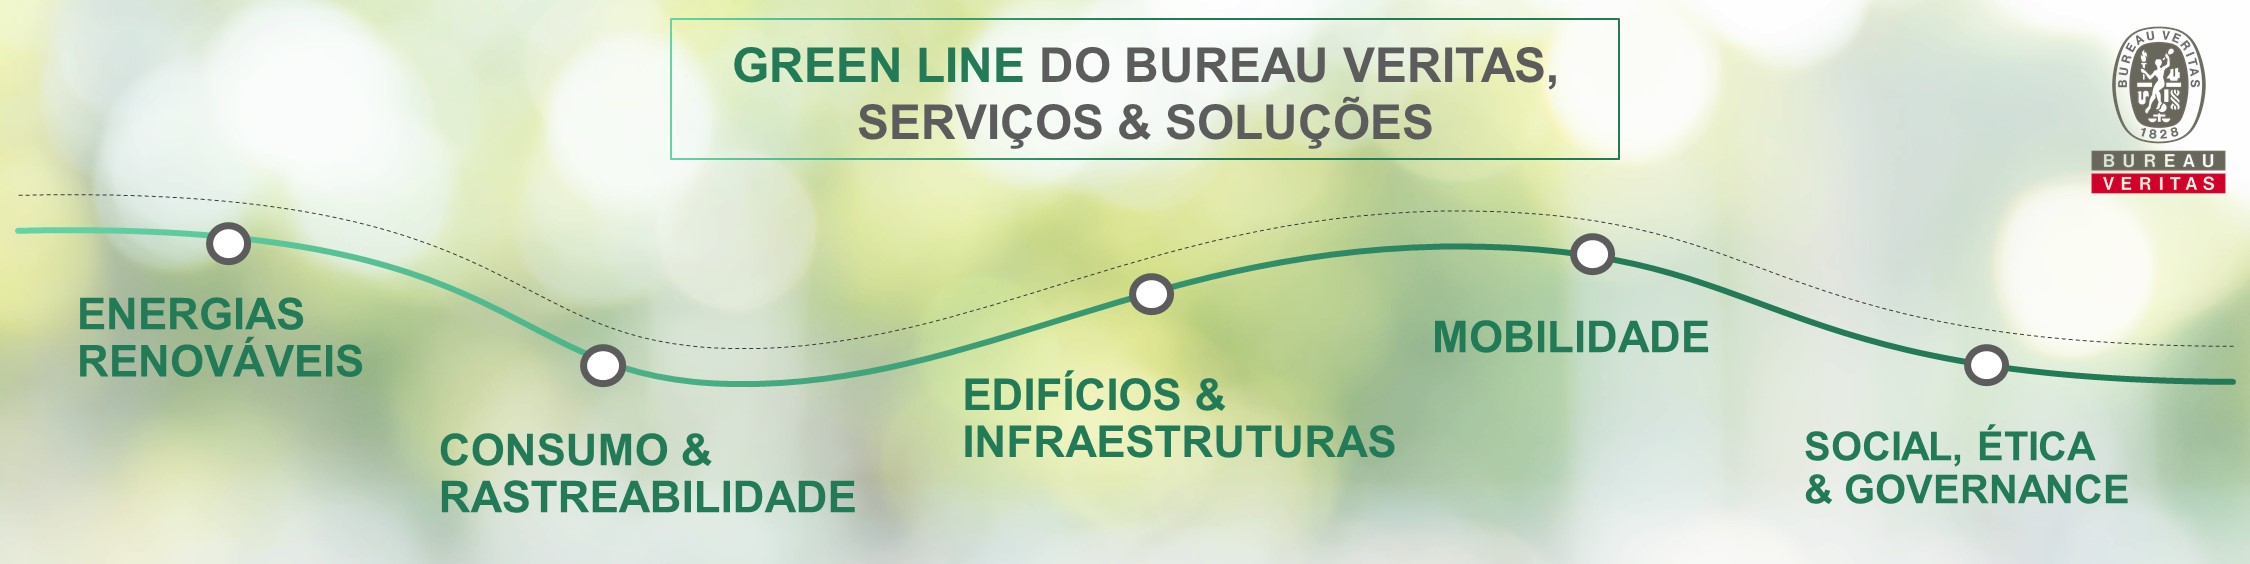 BV Gree line infographic banner-PT_2